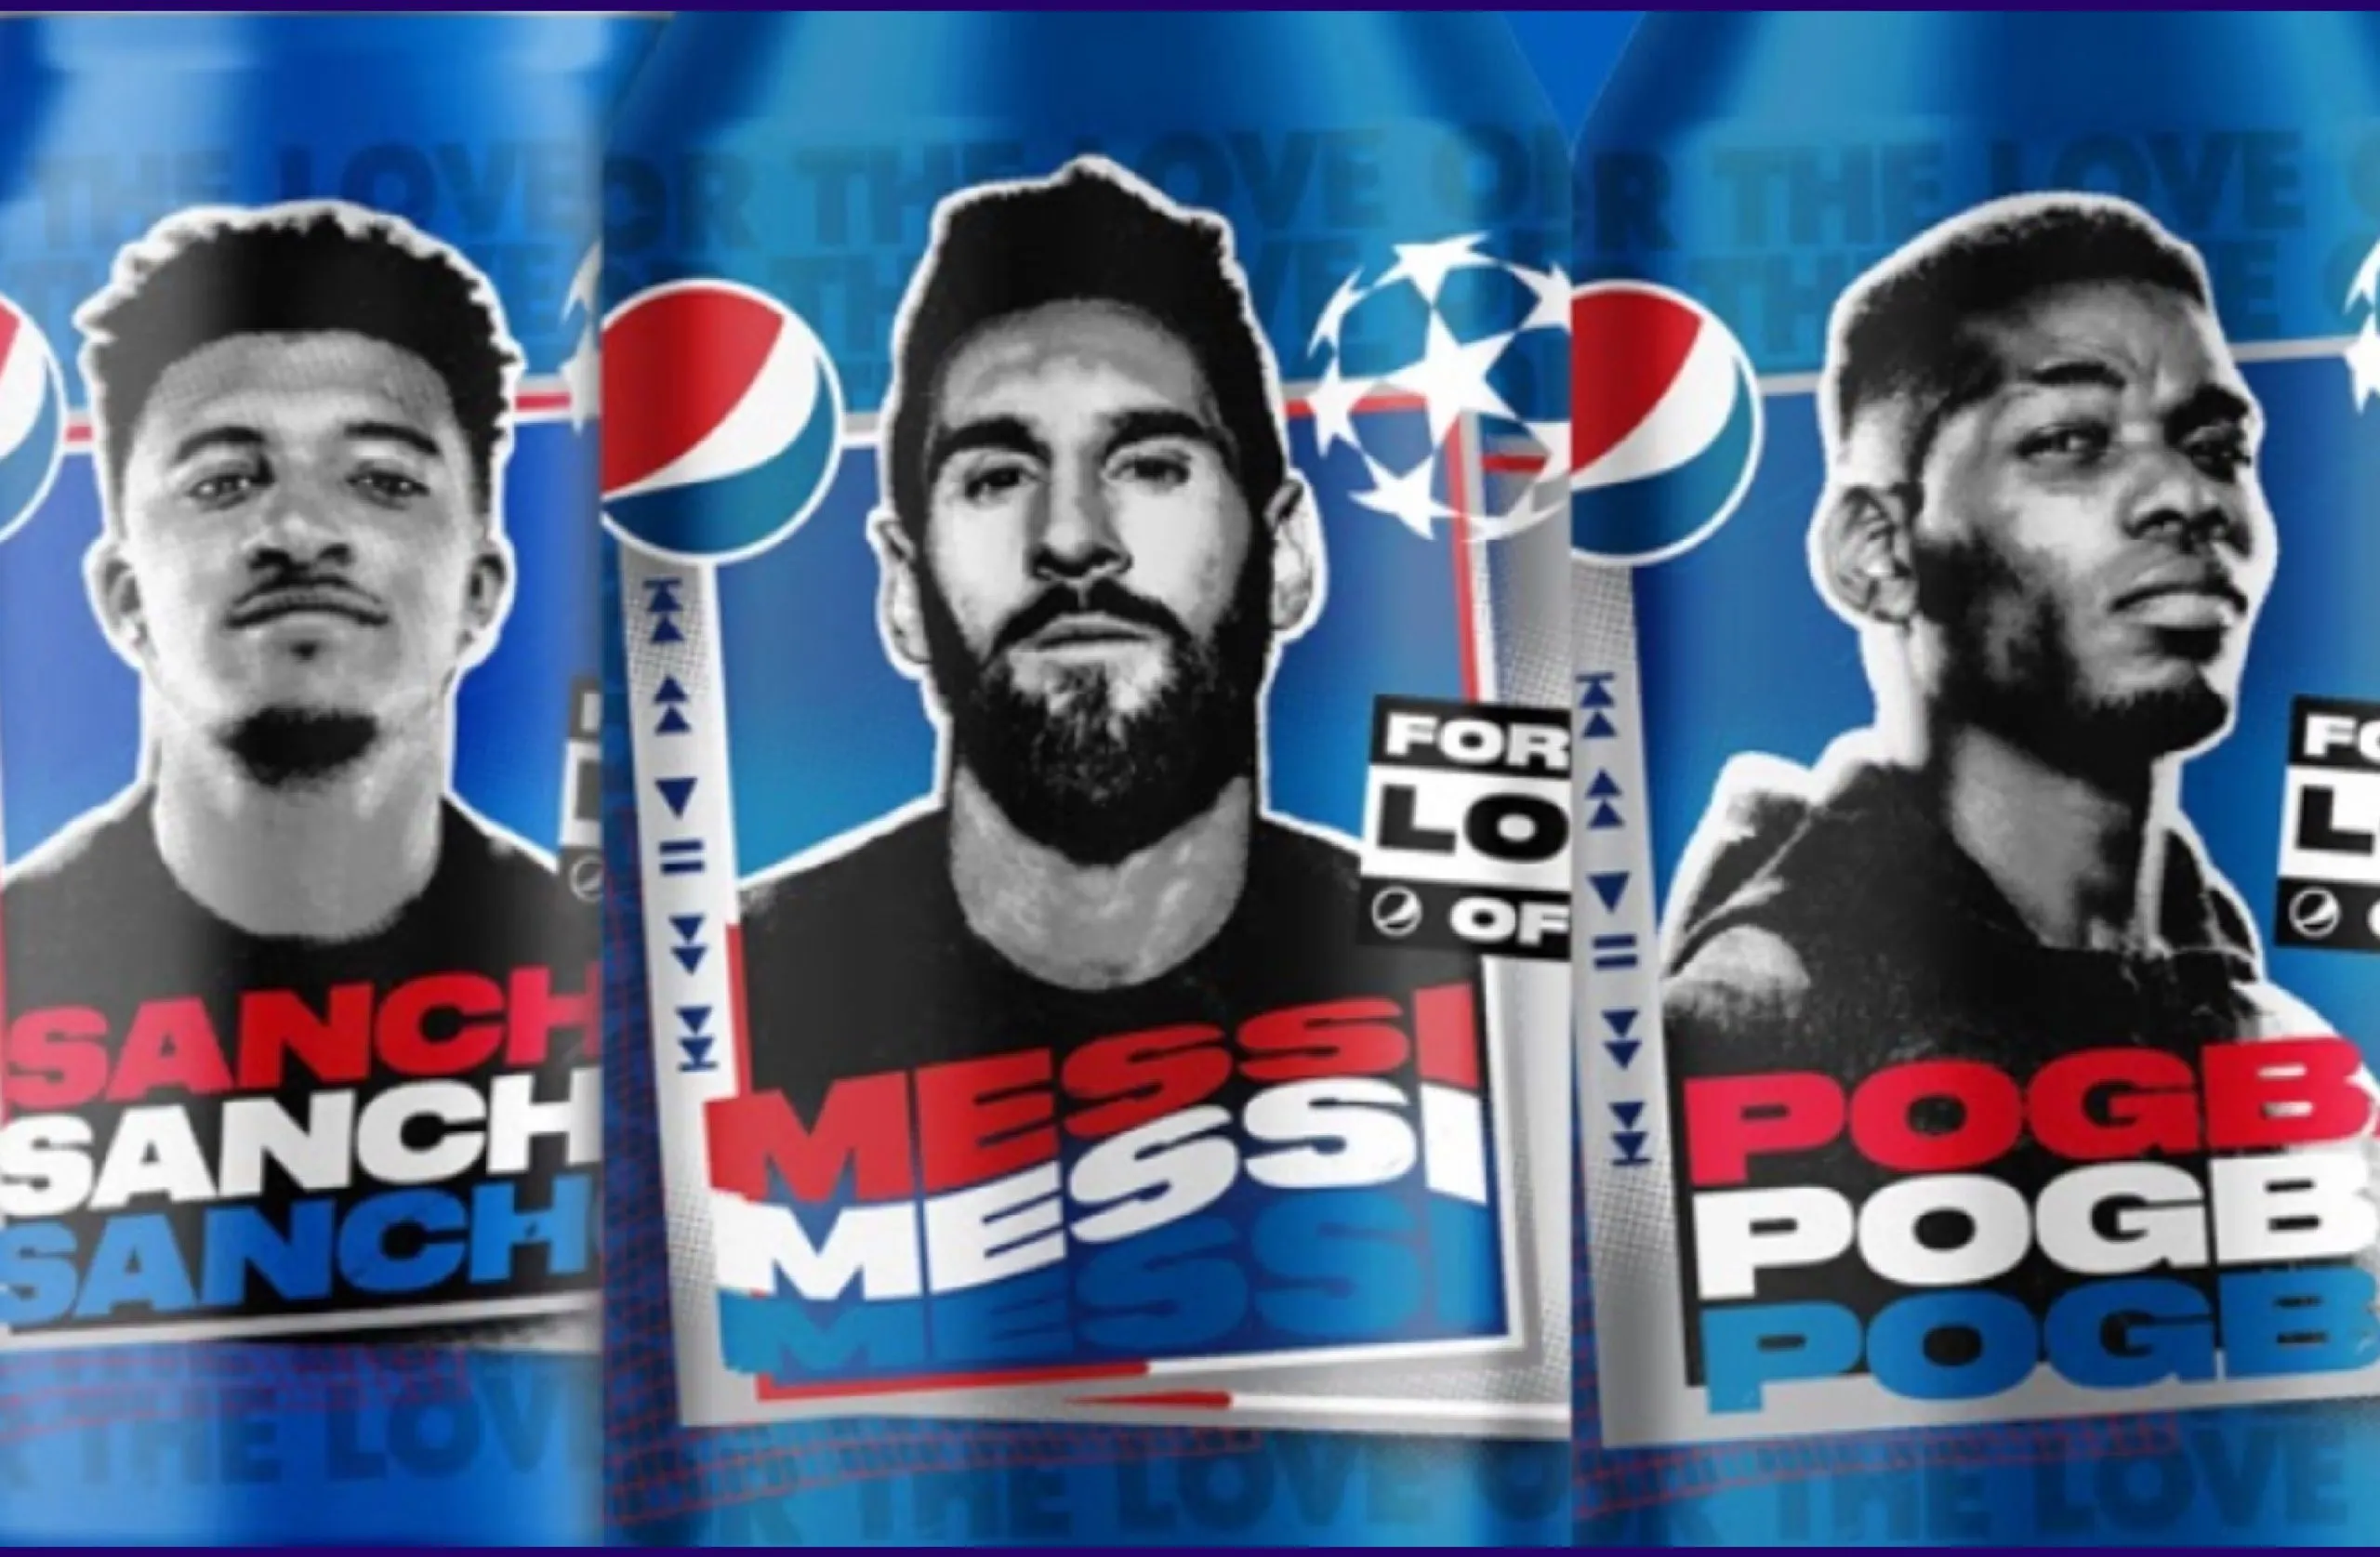 Pepsi ad feat. Messi, Pogba and Sancho